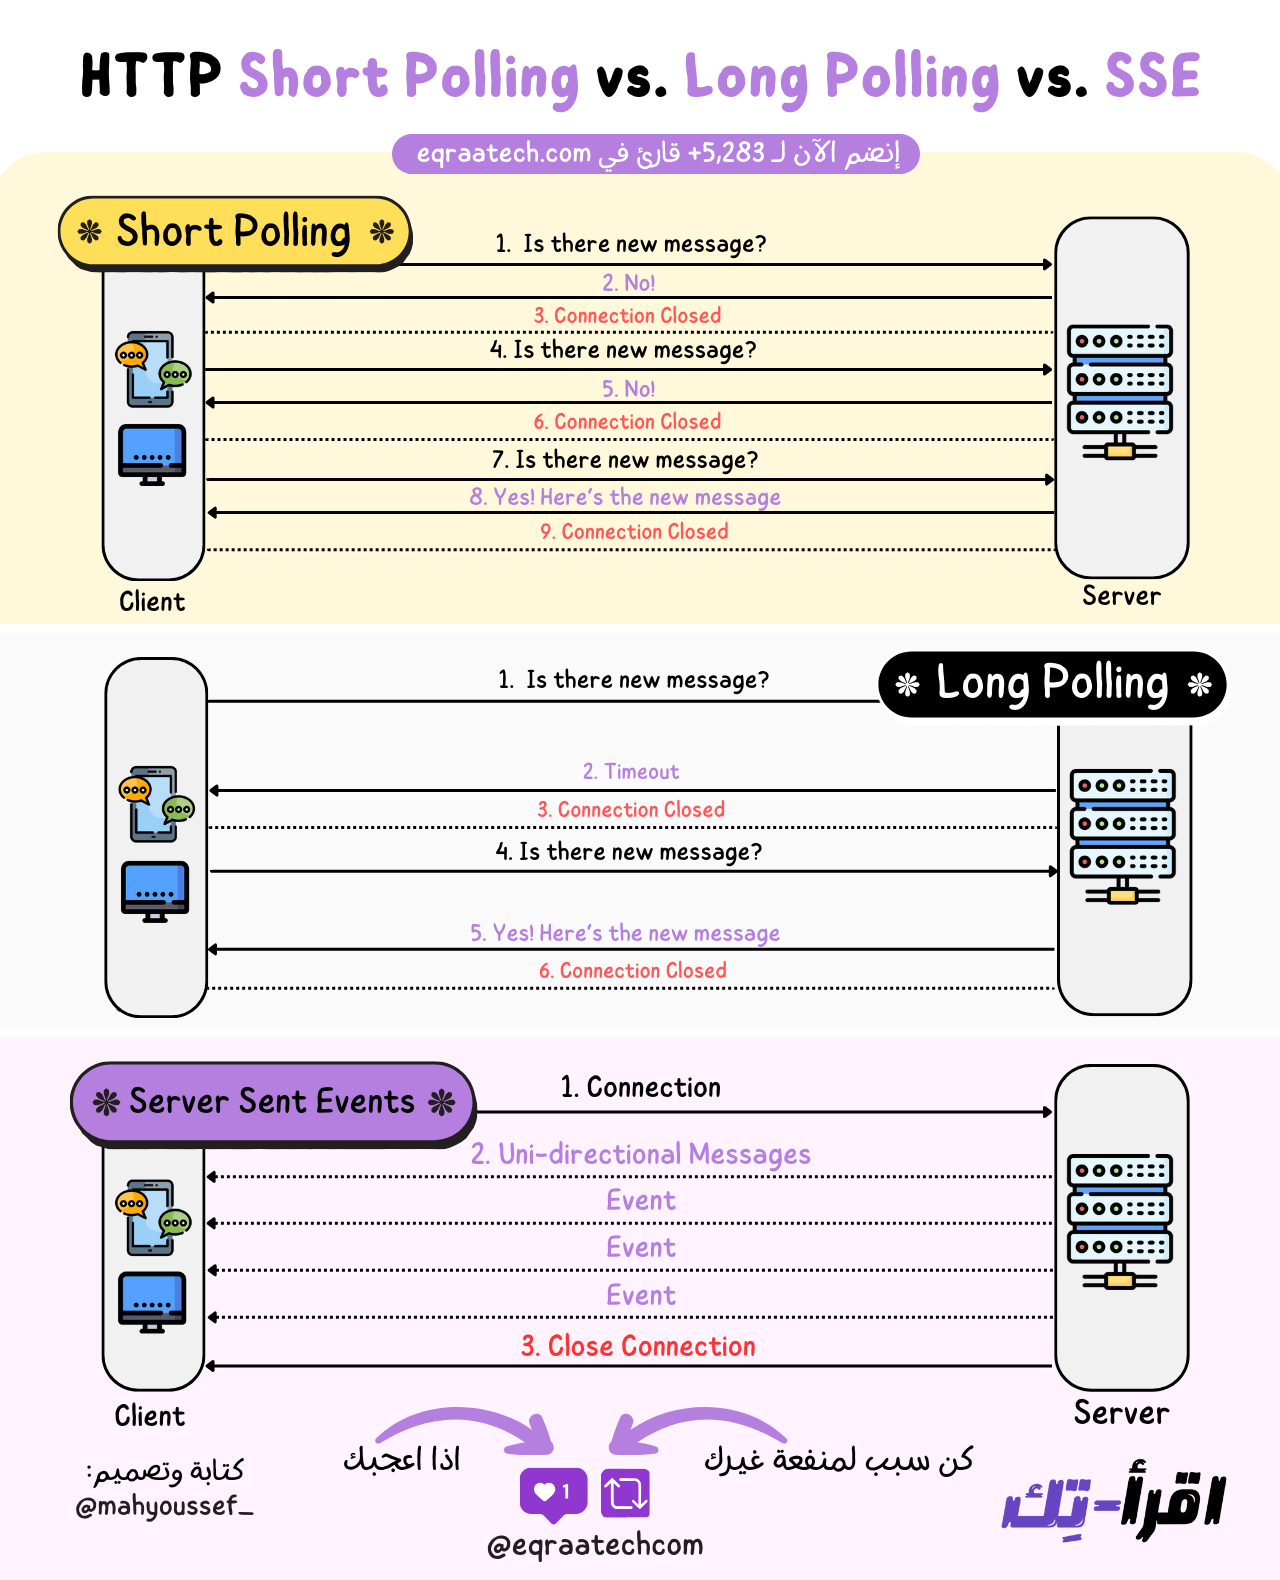 HTTP Short Polling vs Long Polling vs SSE In a Nutshell